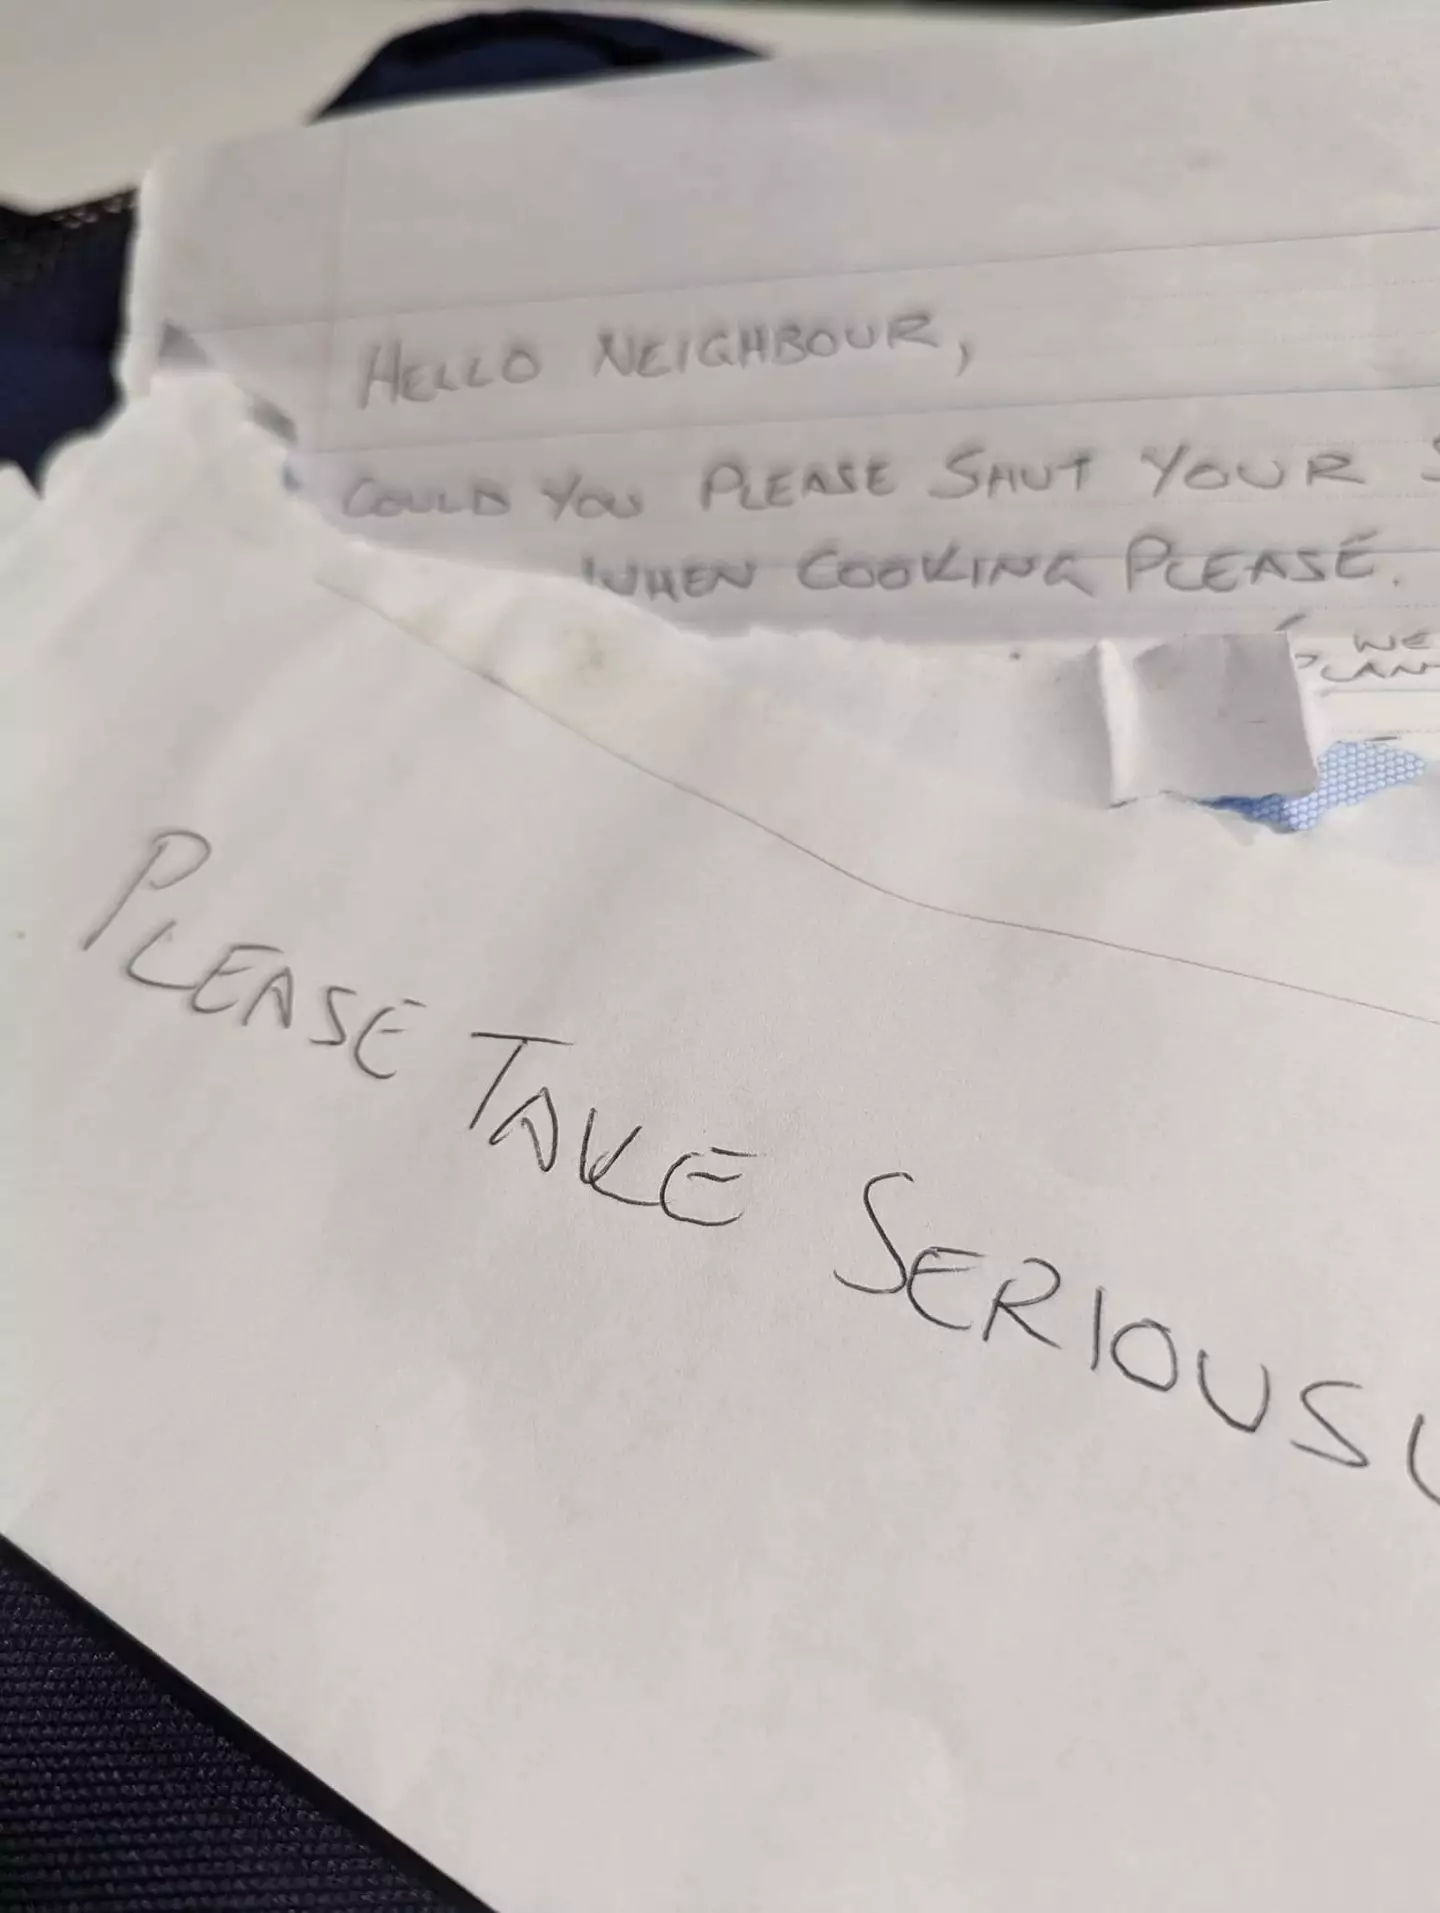 On the envelope was written 'Please take seriously'.